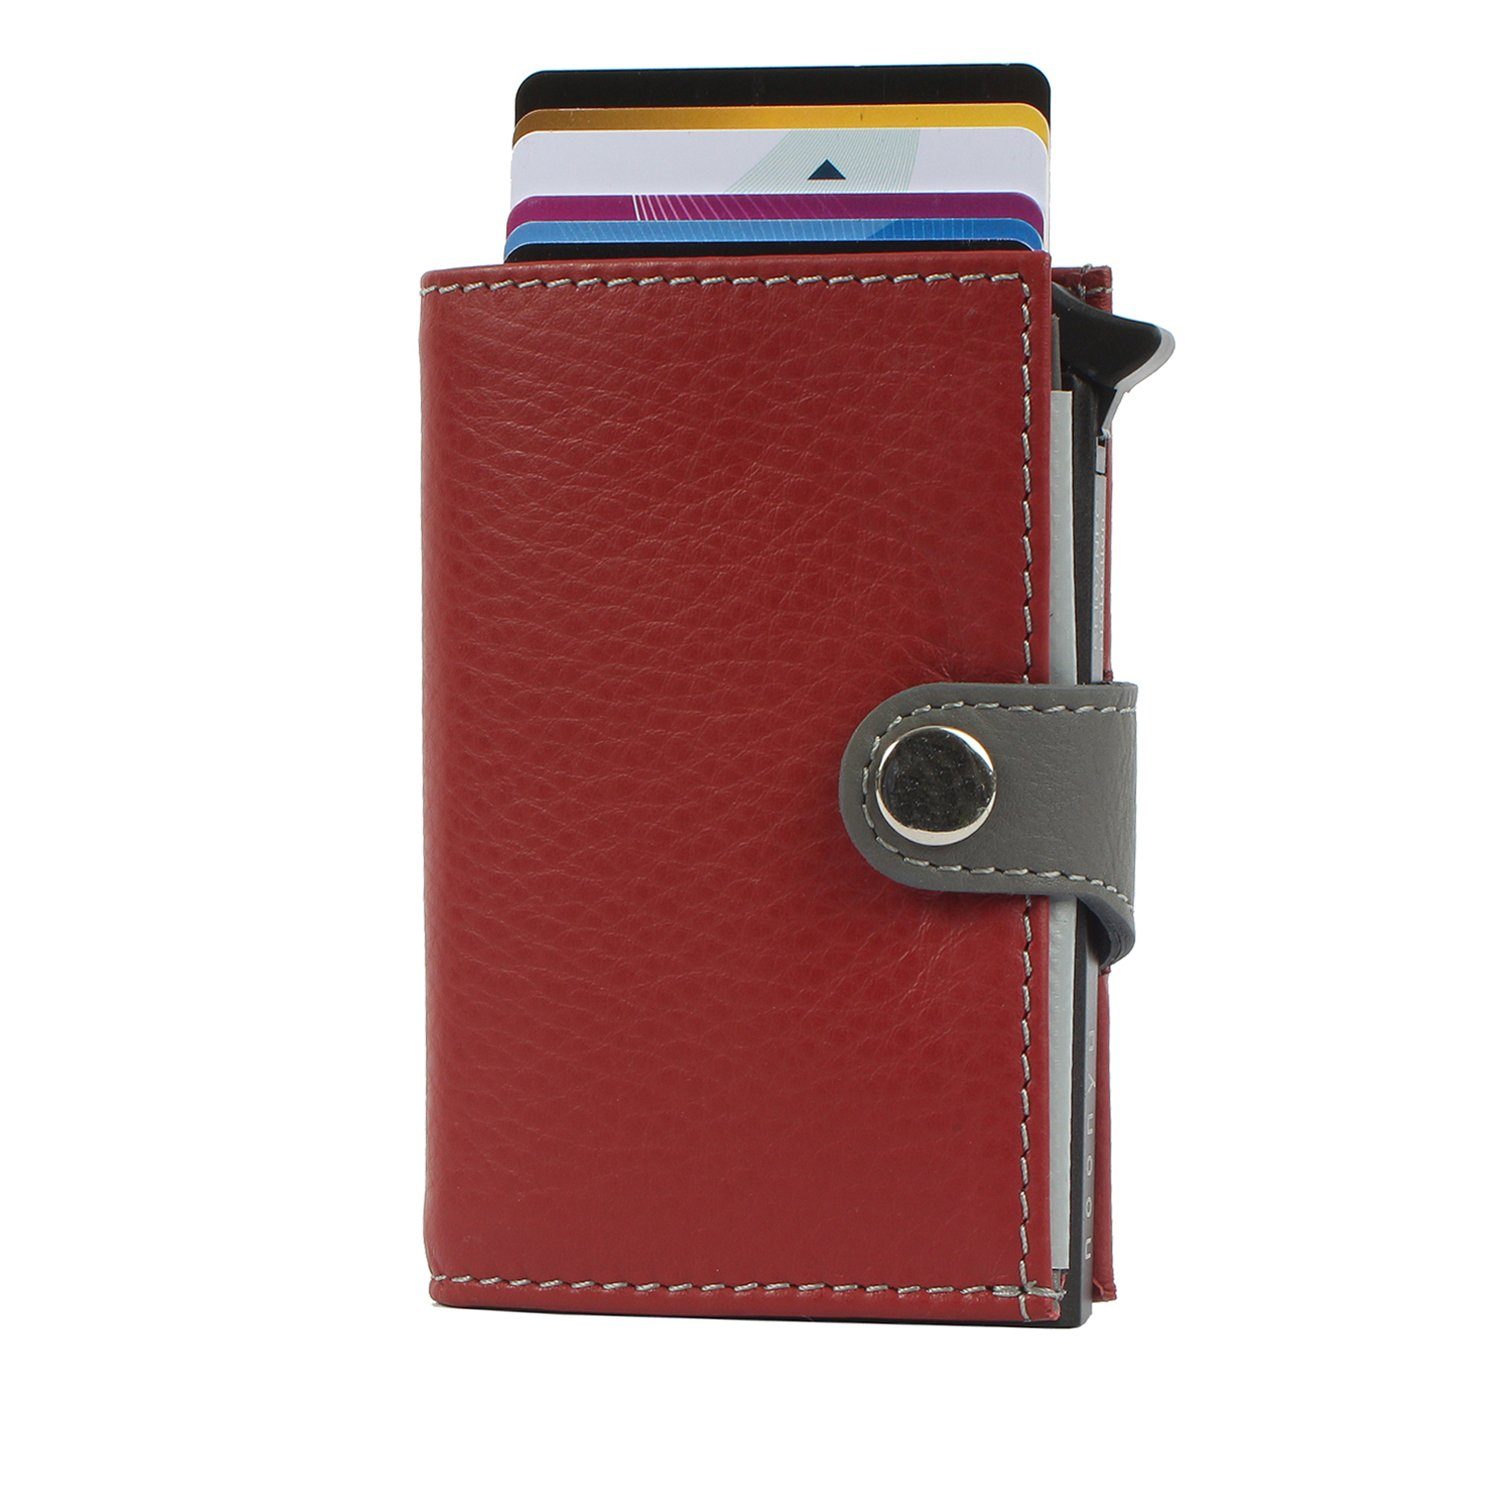 noonyu Margelisch Upcycling Geldbörse aus Mini Kreditkartenbörse single karminrot leather, Leder